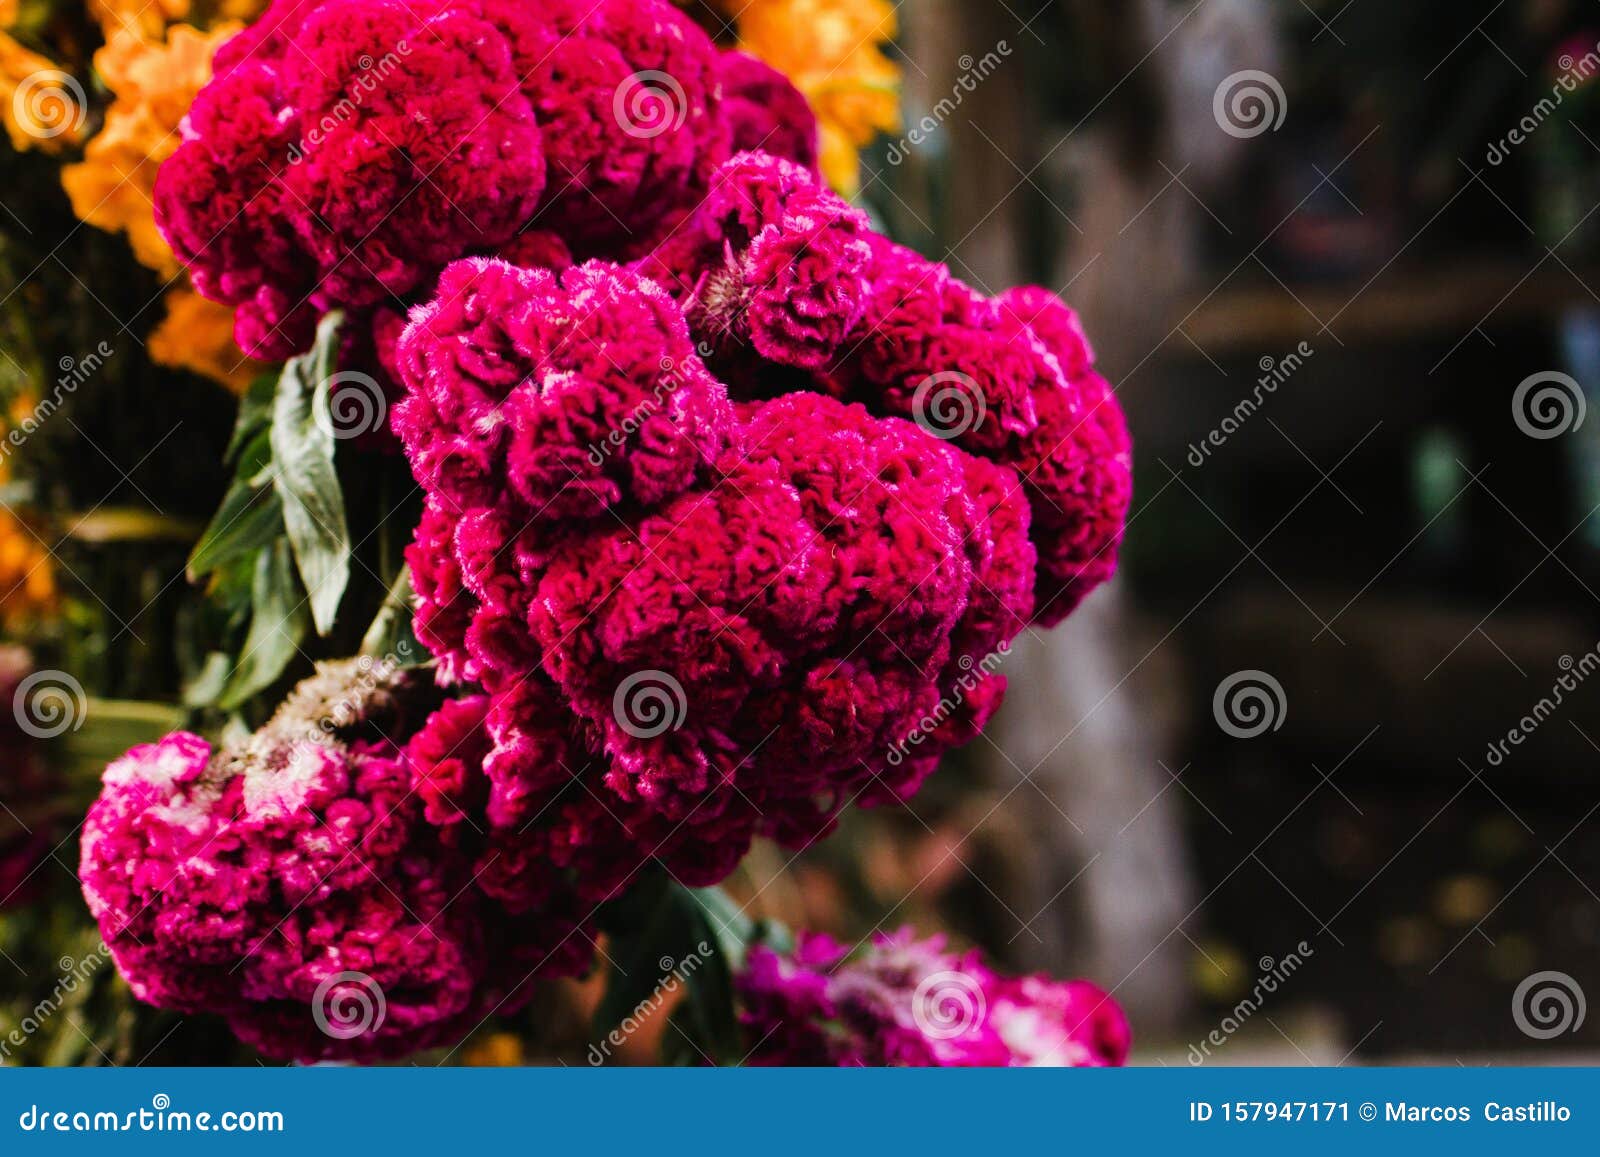 Flor De Terciopelo O Celosia, Mexican Flowers for Offerings Ofrendas in  DiÂa De Muertos Day of the Dead Mexican Tradition Stock Image - Image of  death, celosia: 157947171